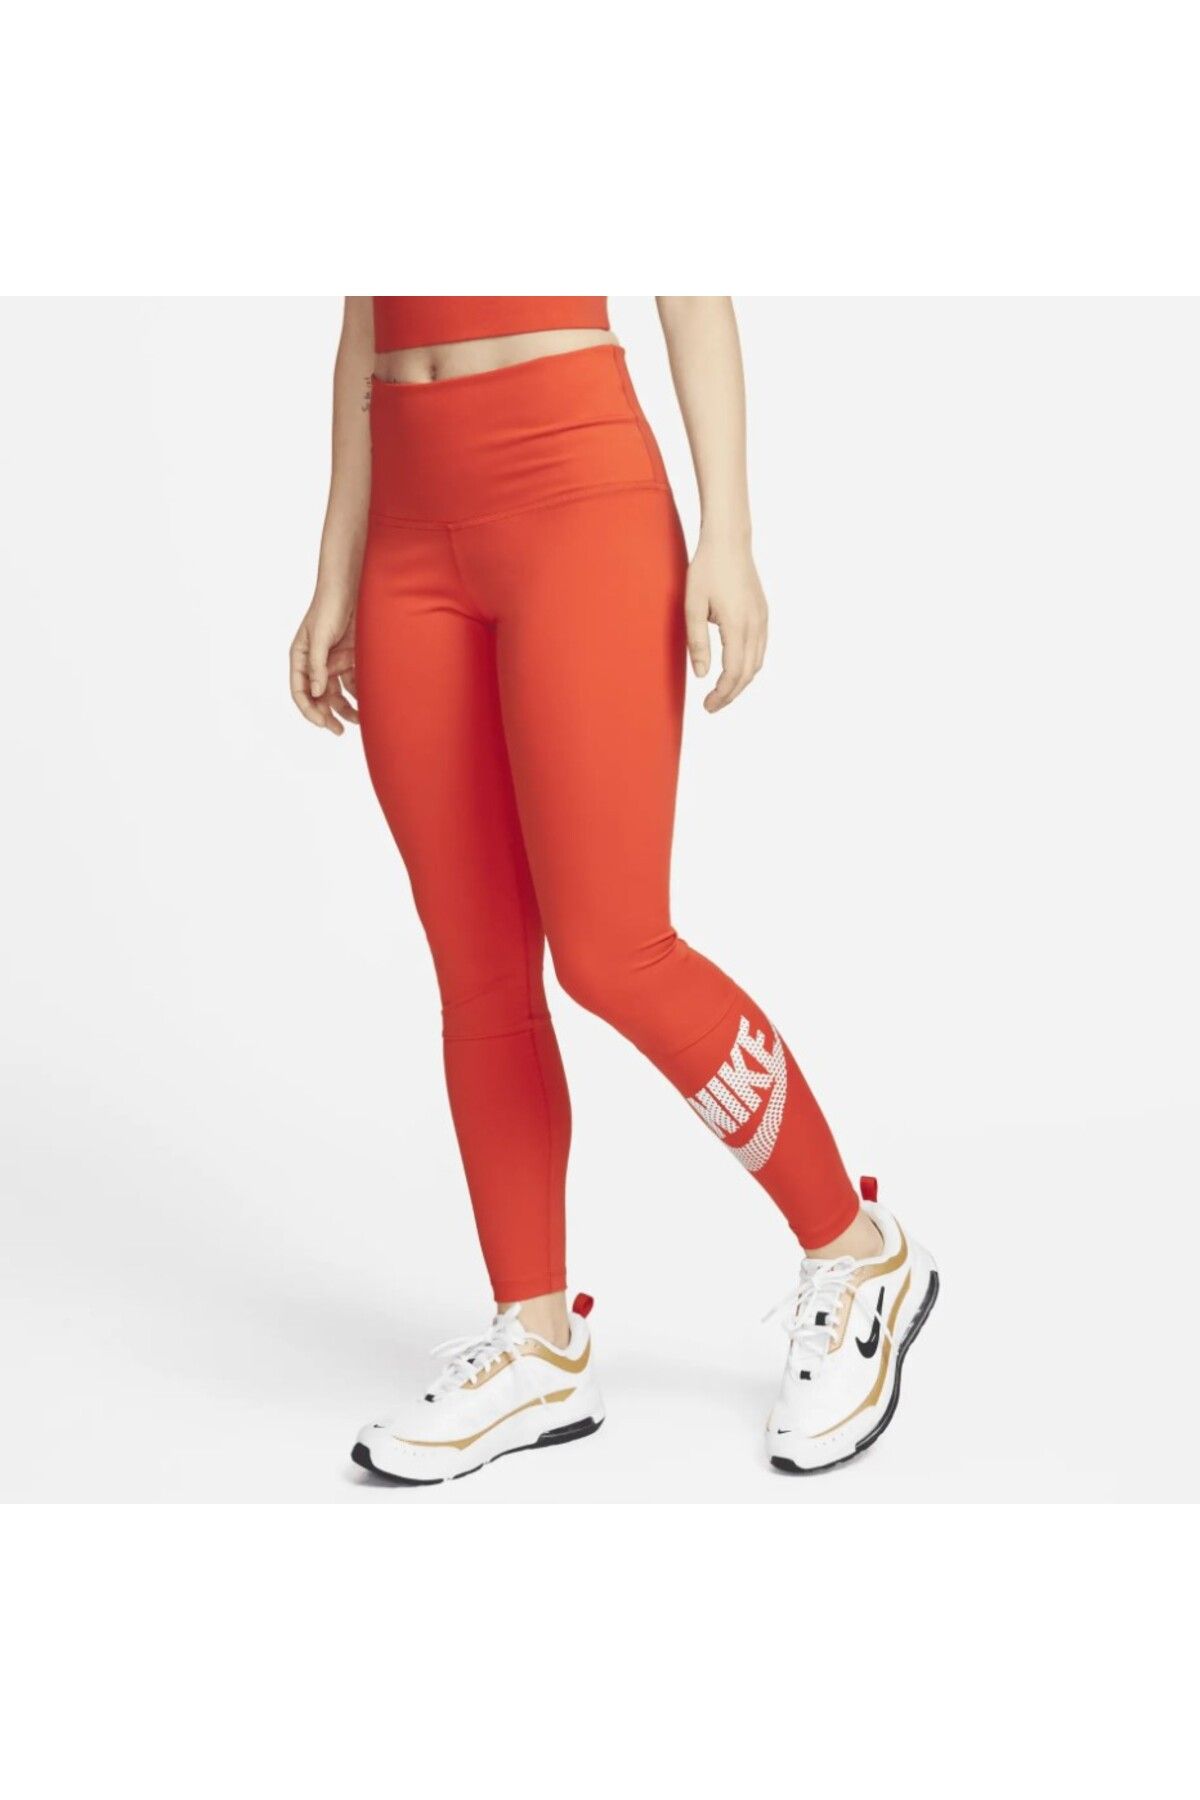 Nike Dri-Fit One Colorblock High-Waisted Dance Training Toparlayıcı Kadın Tayt